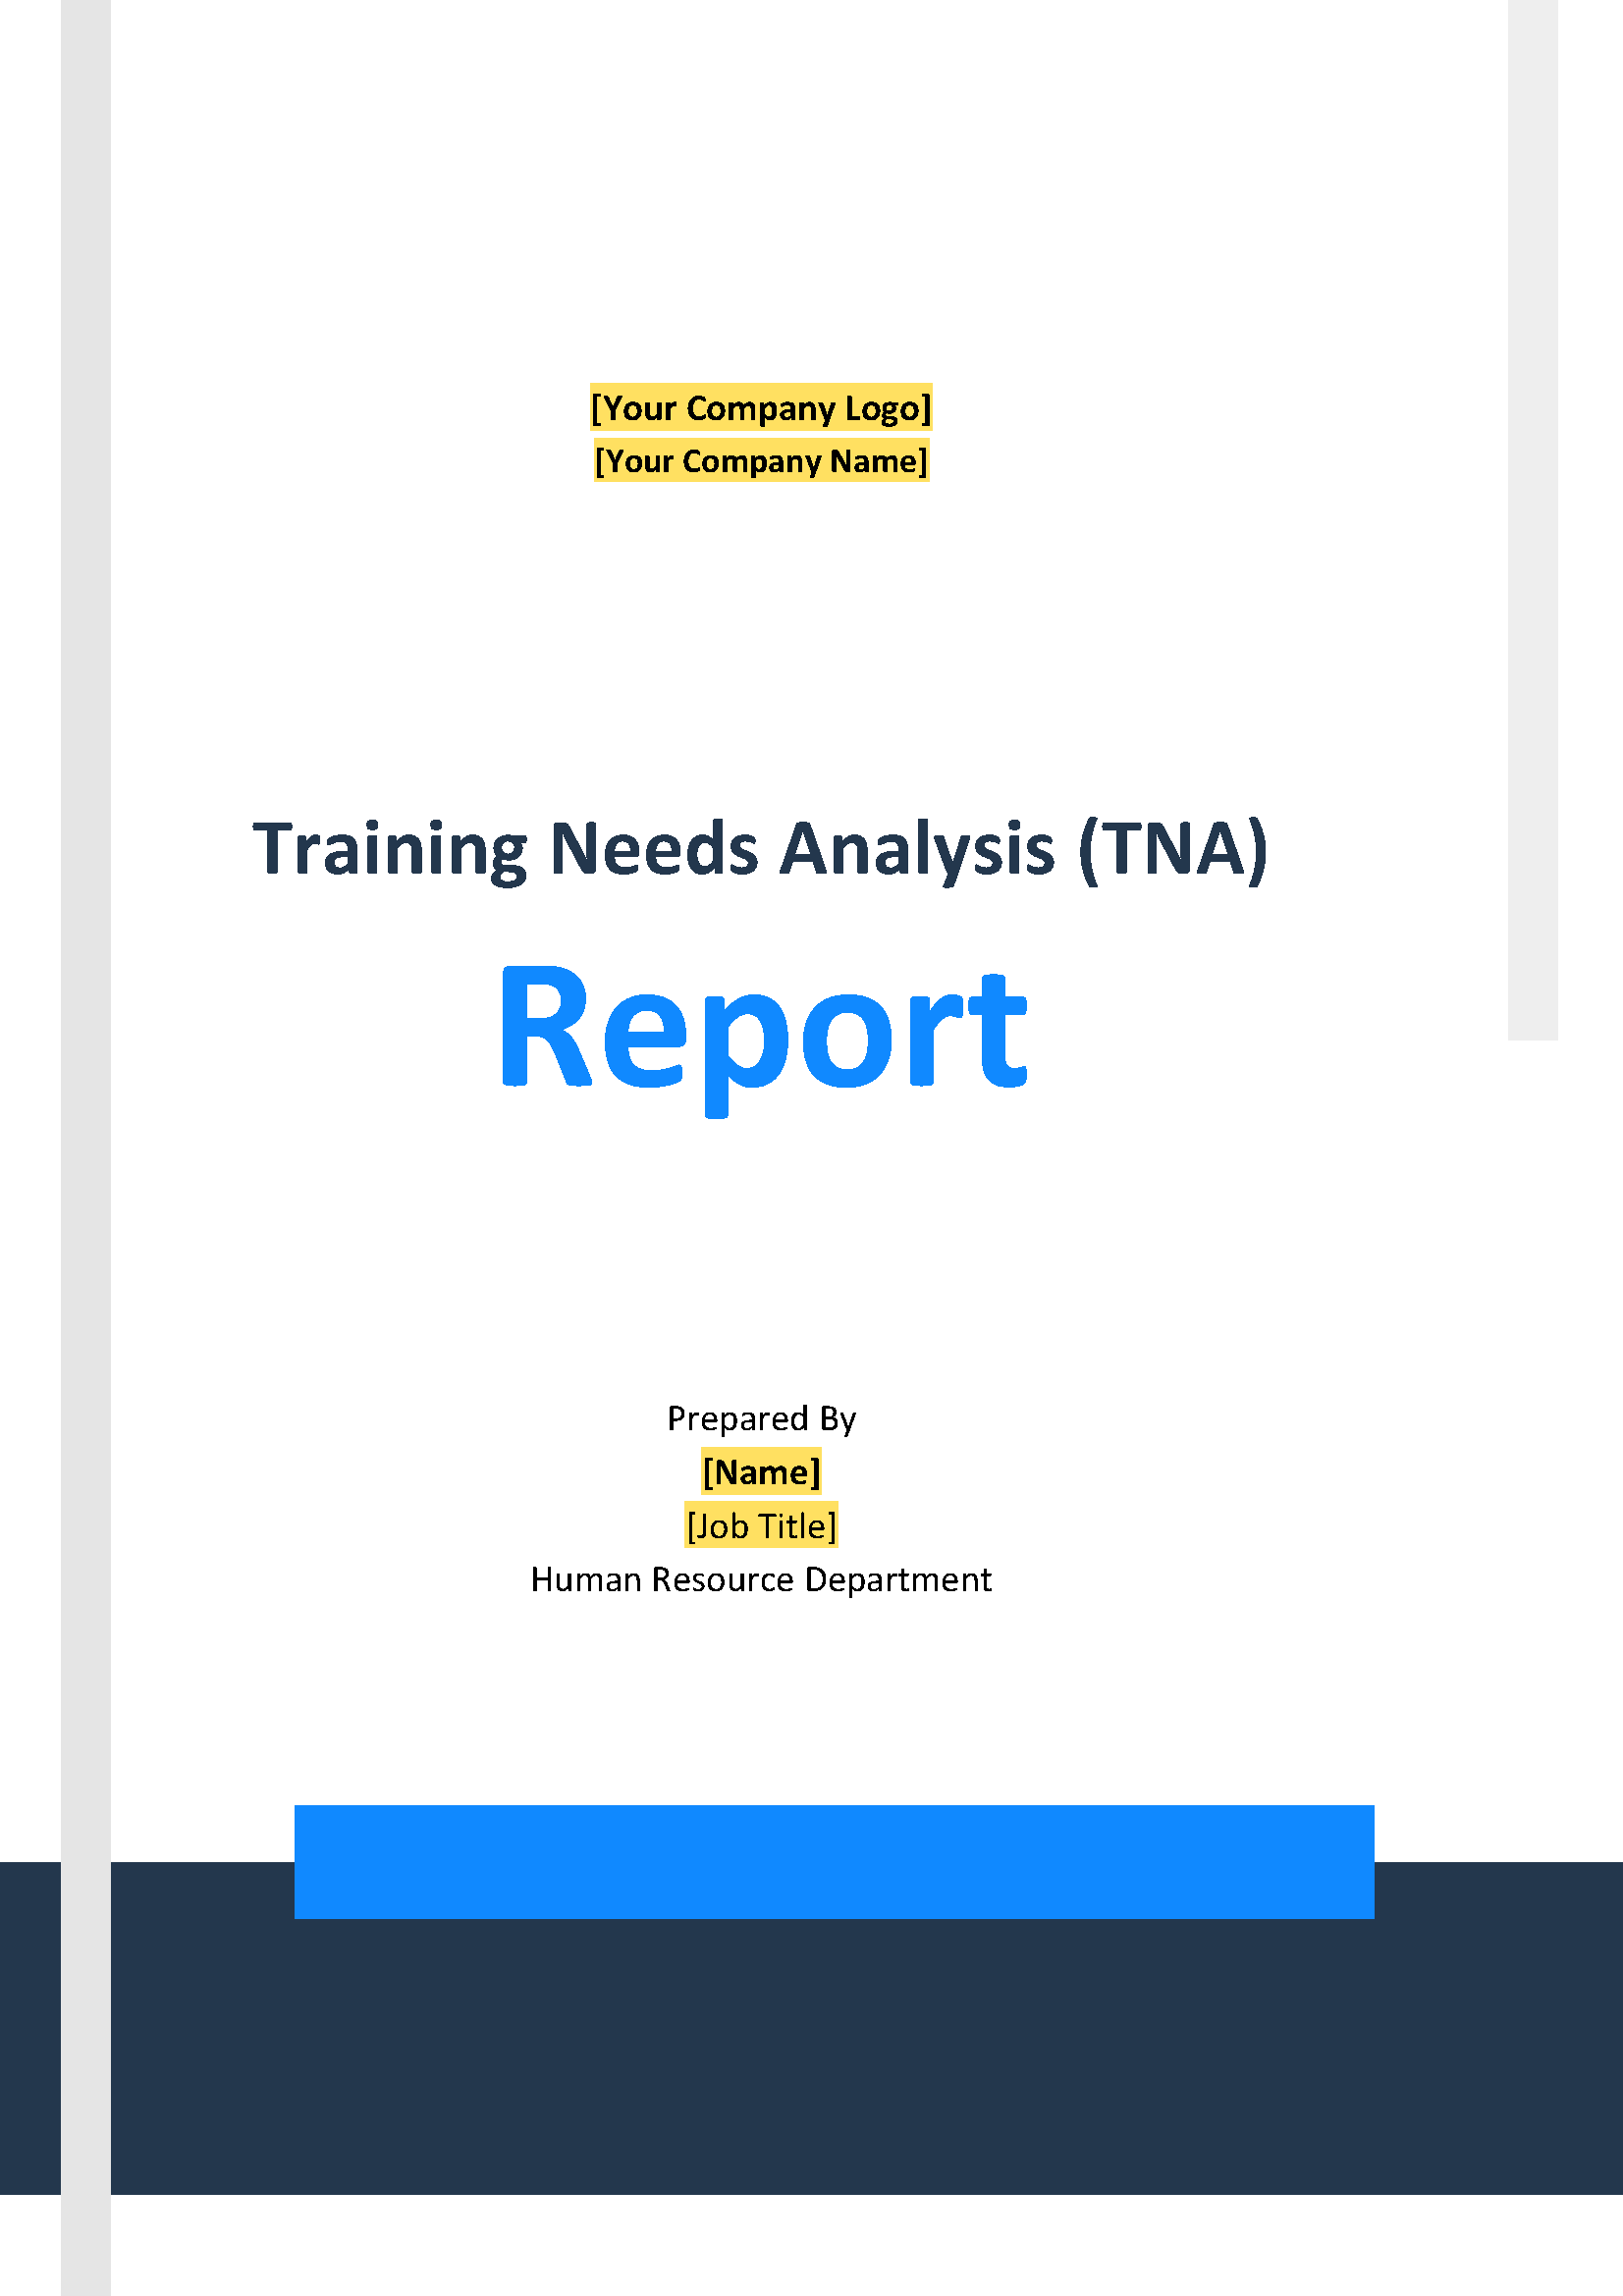 Training Needs Analysis Report